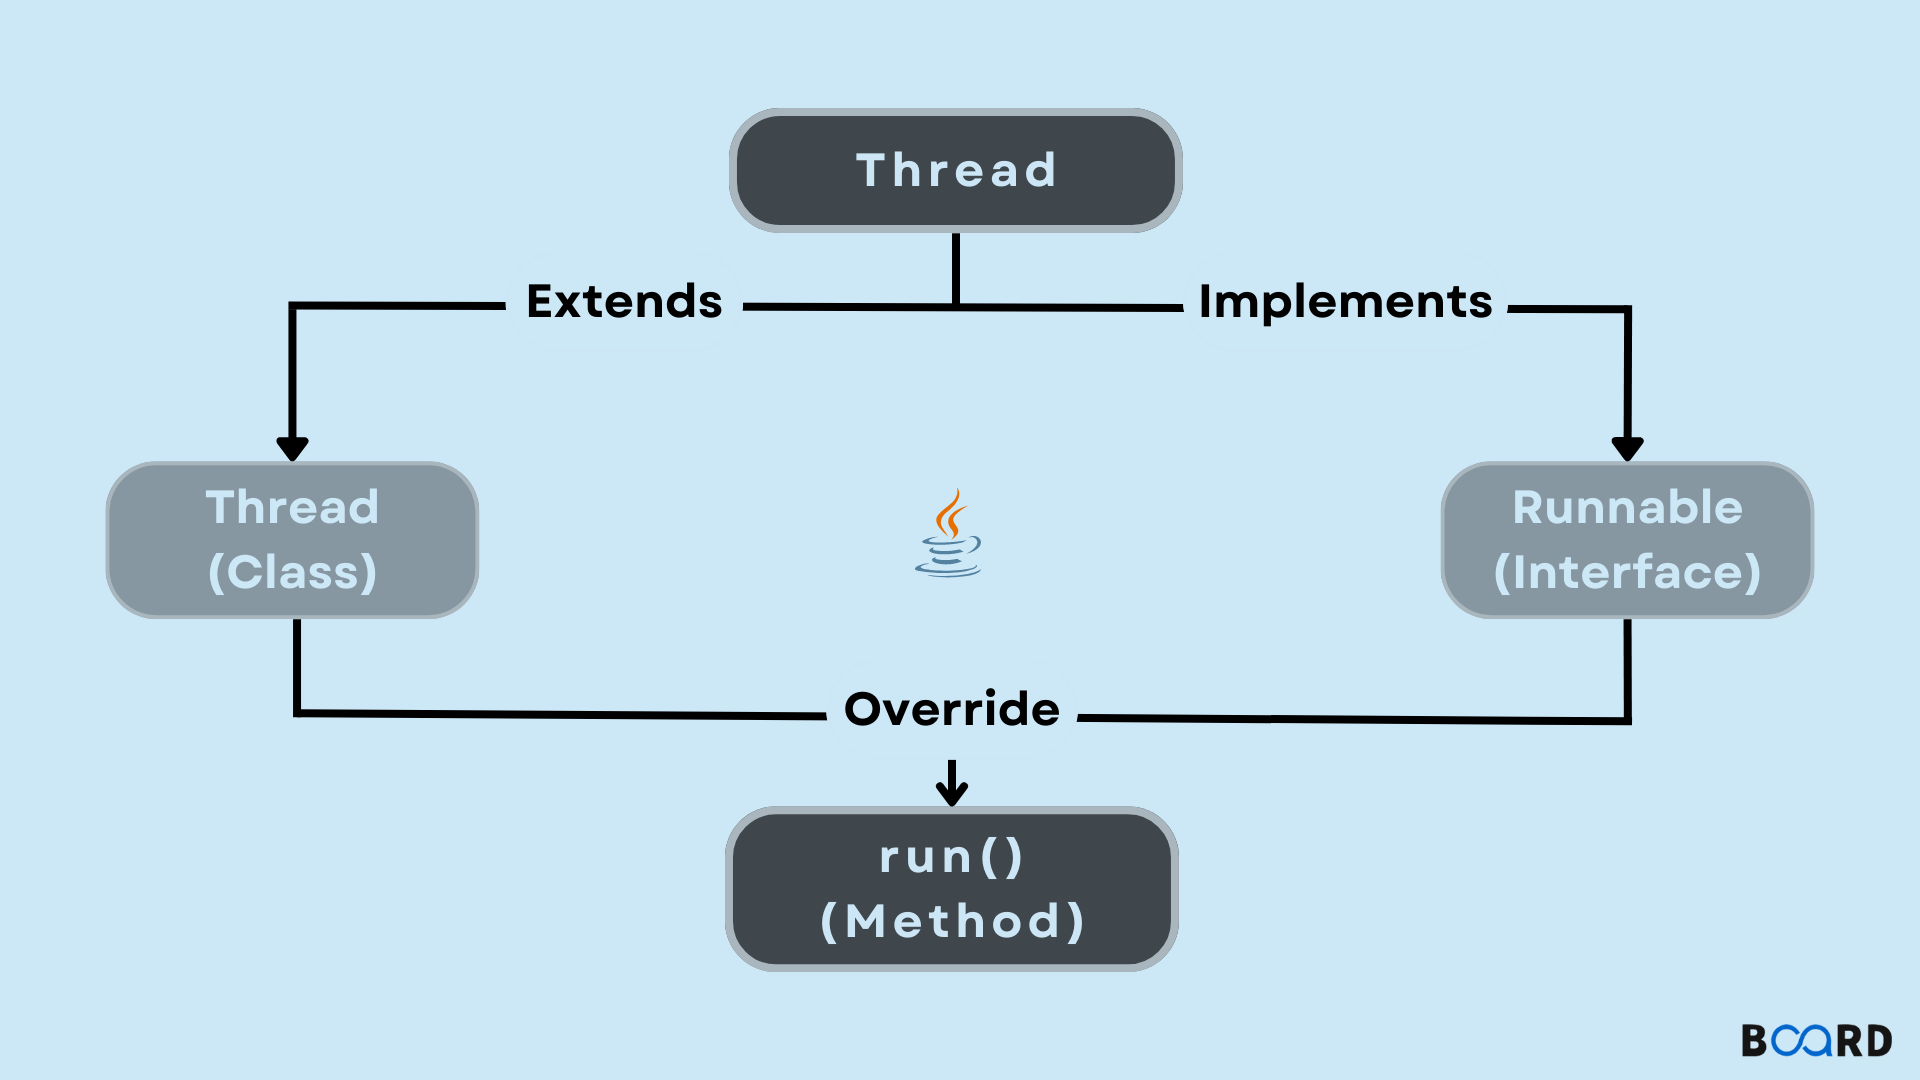 Runnable Interface in Java